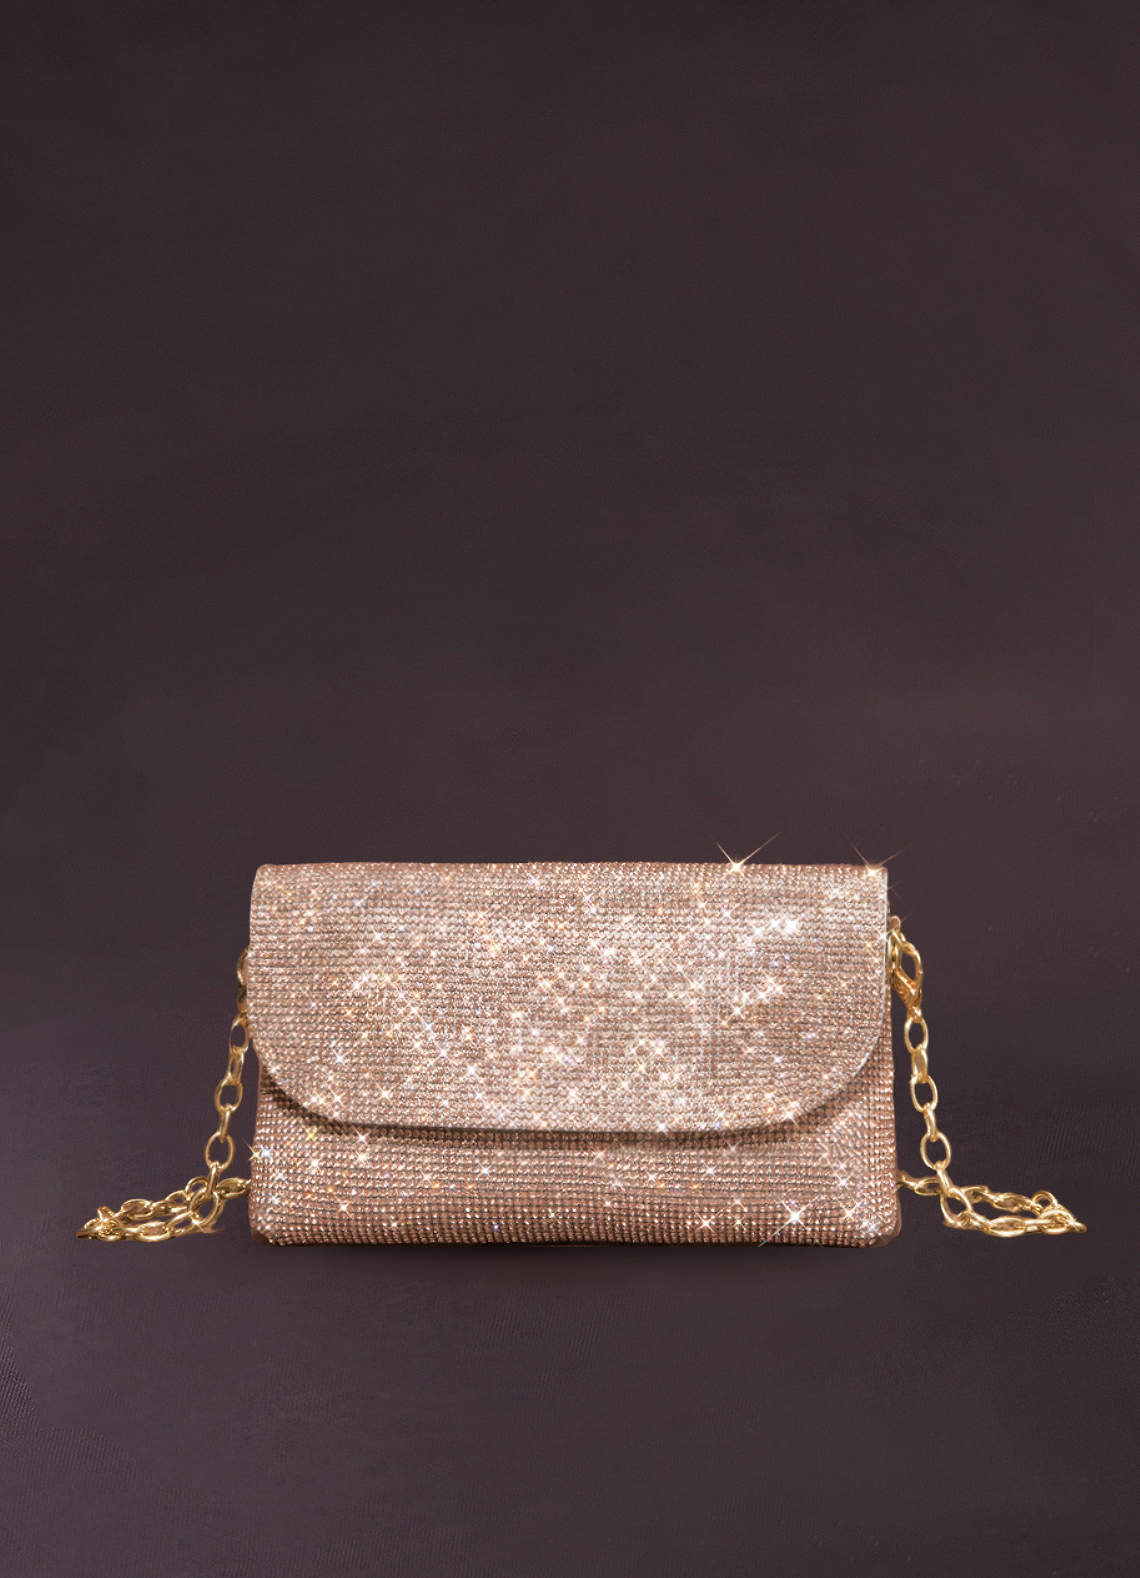 Women's Evening Clutch Bag for Wedding Clutch Purse Chain Shoulder Bag  Small Party Handbag with Handle - Gold - Walmart.com